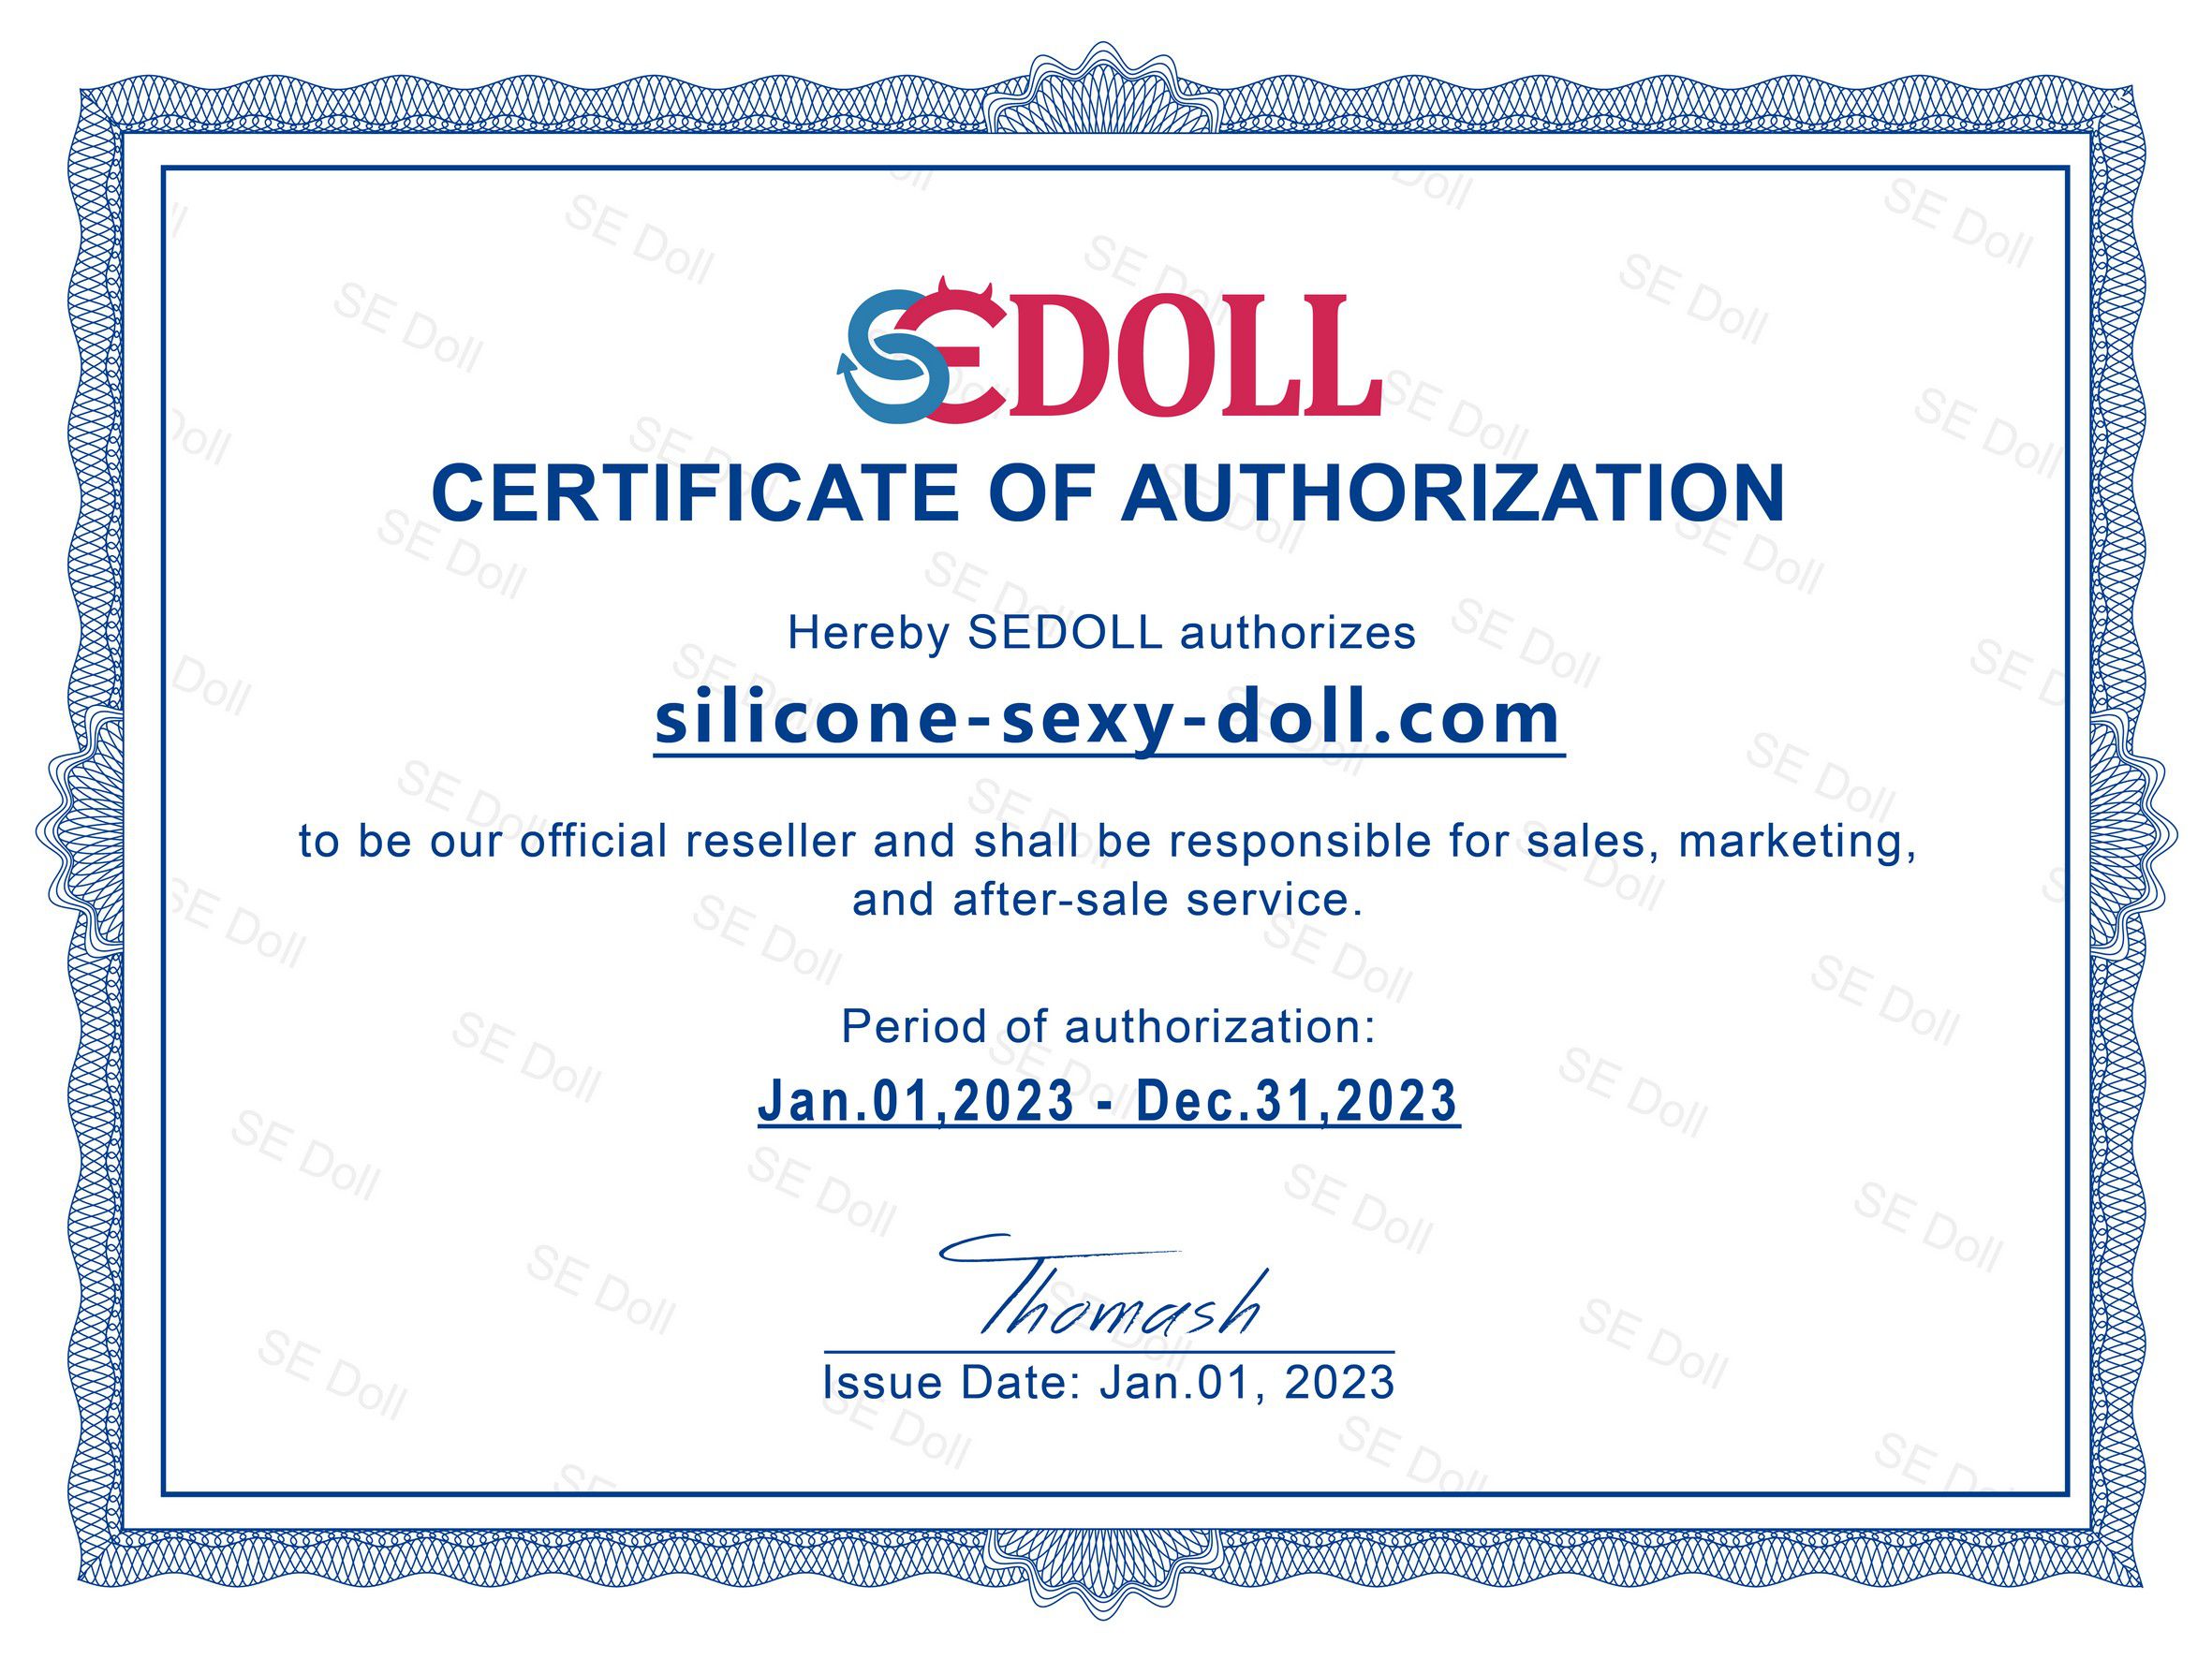 SEDoll Certificate